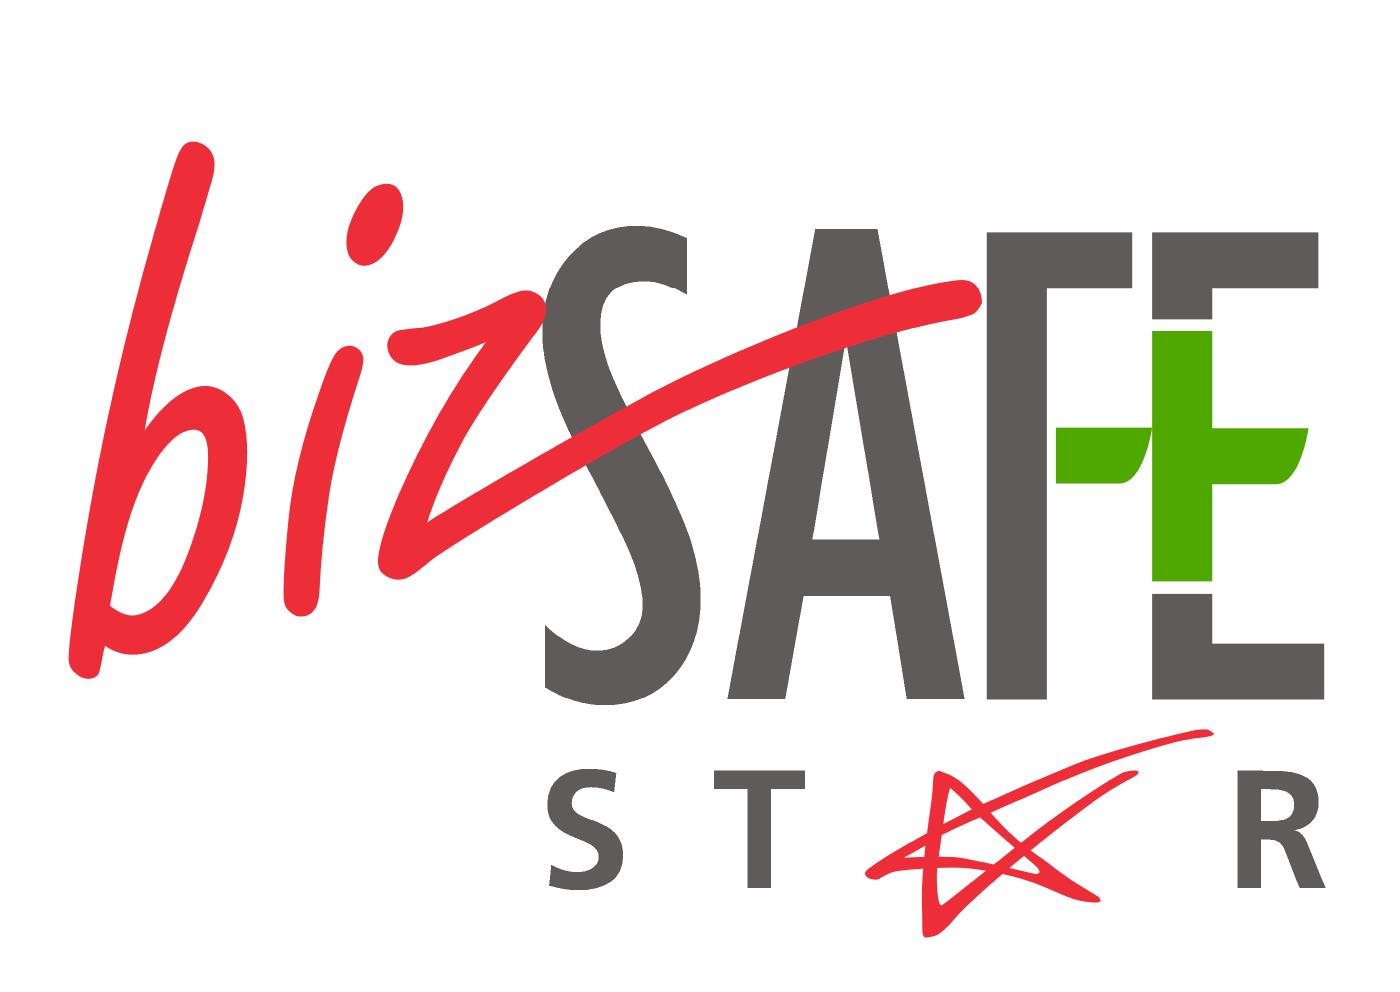 bizSAFE STAR logo